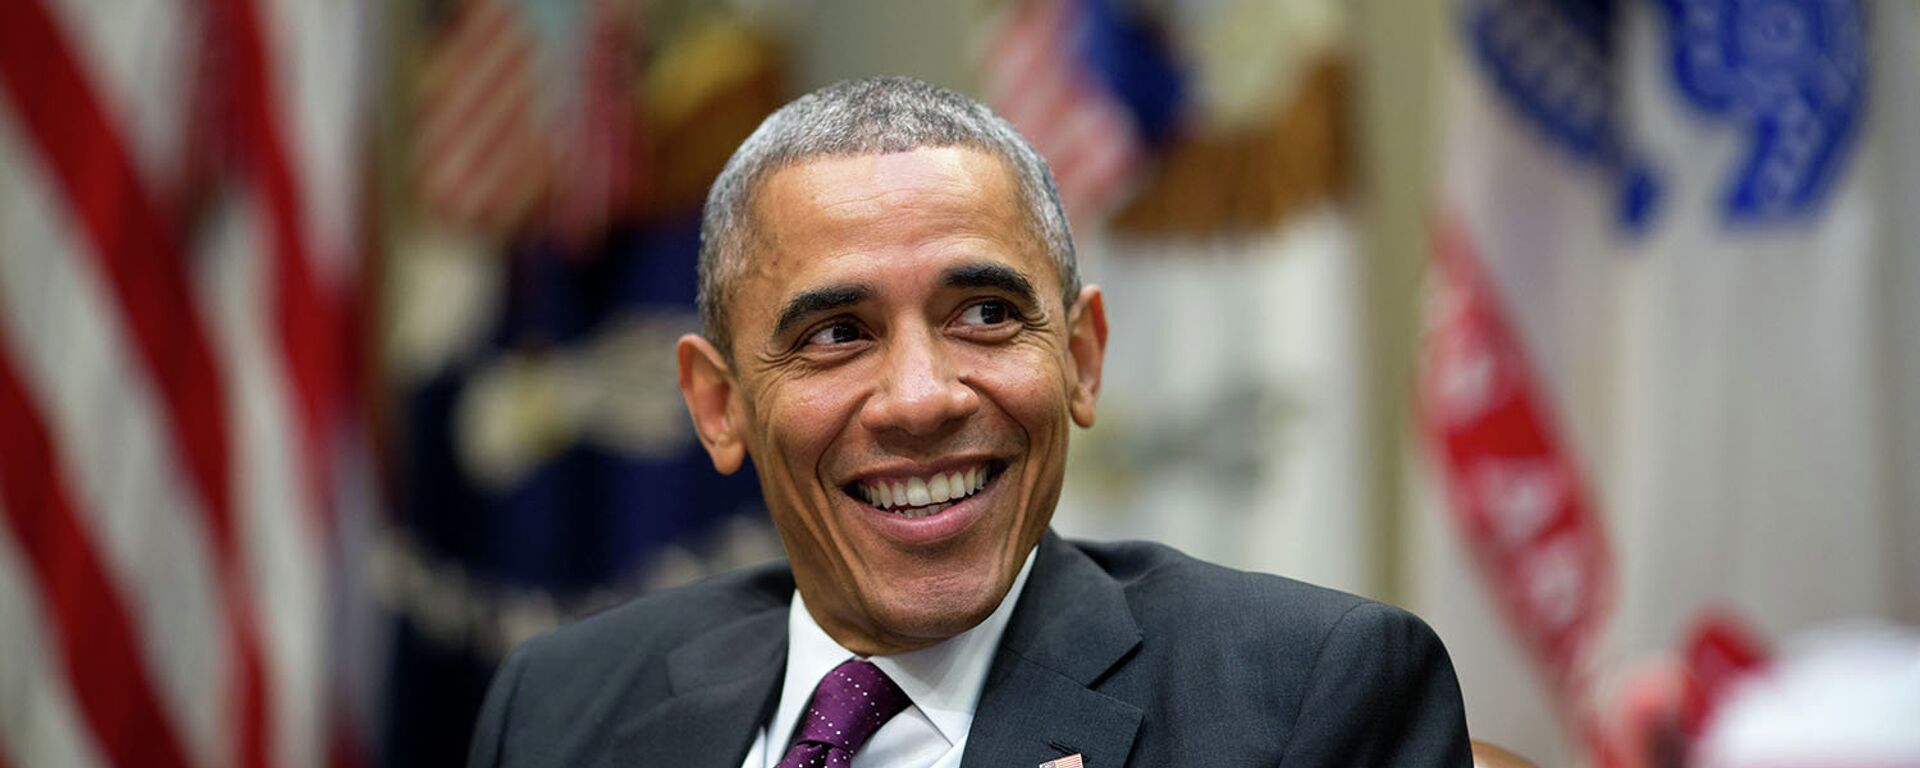 Barack Obama, presidente de EEUU - Sputnik Mundo, 1920, 15.08.2015